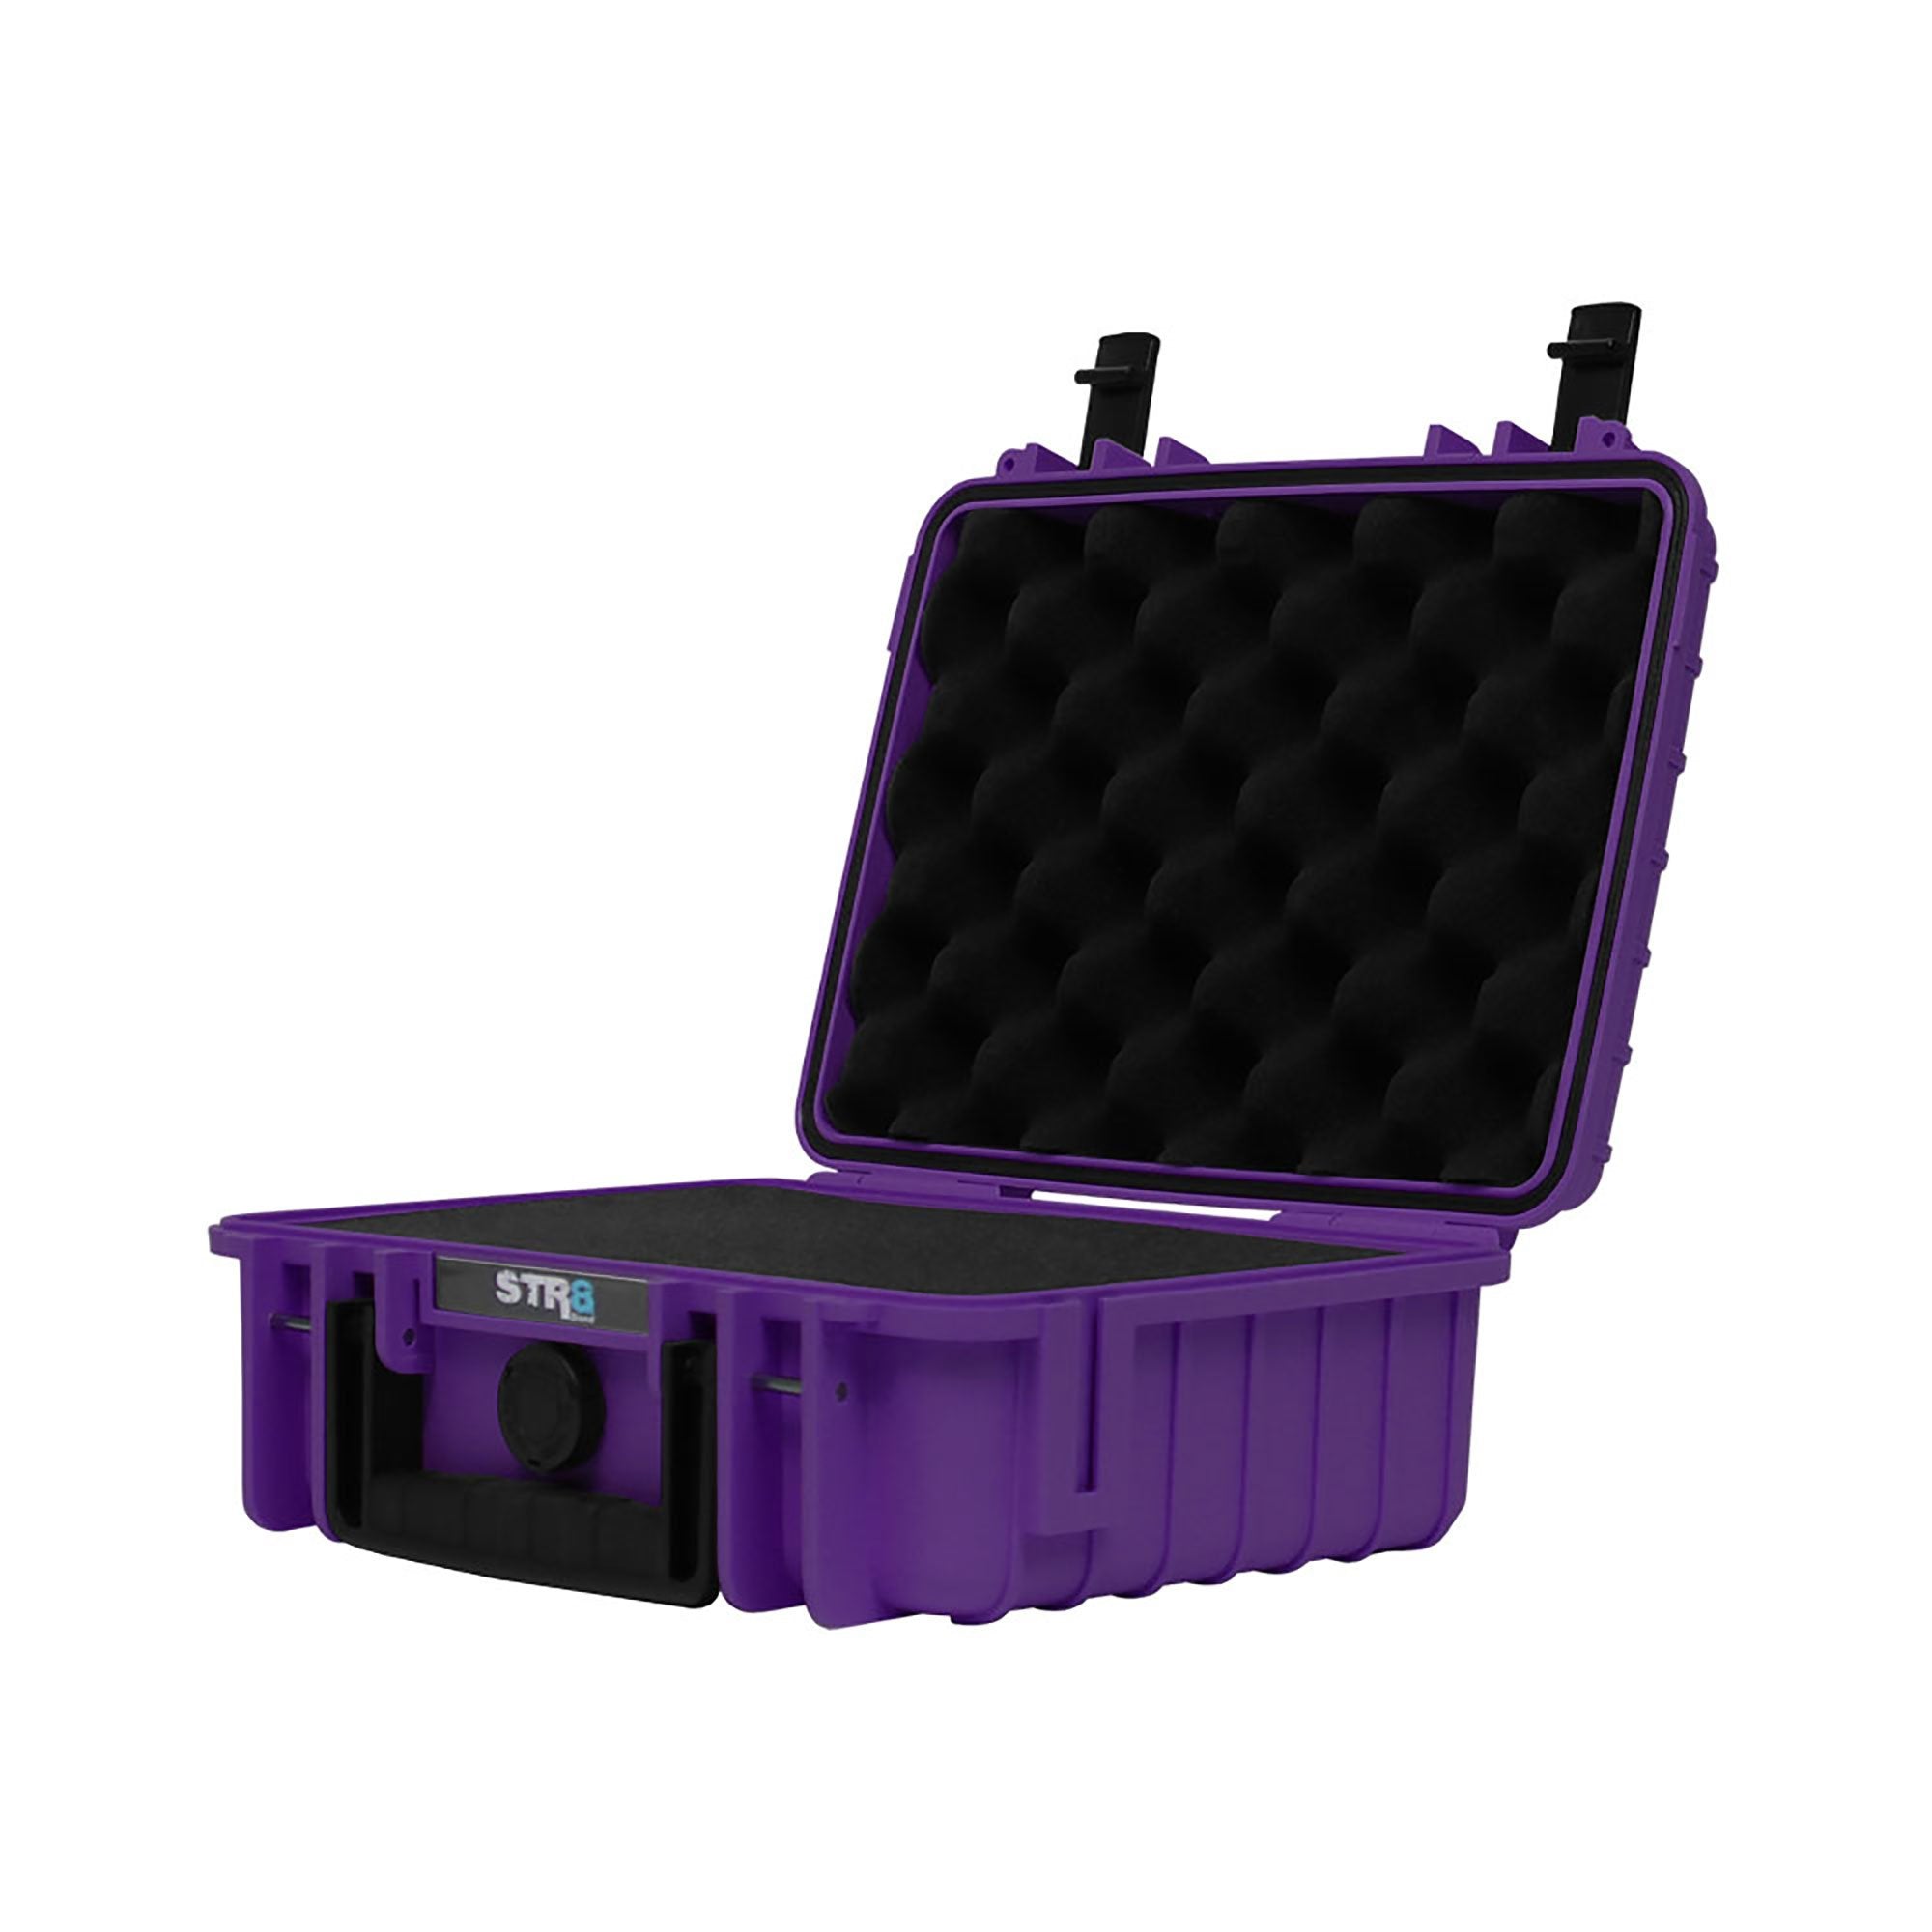 10" 2 Layer Wicked Purple STR8 Case - 2